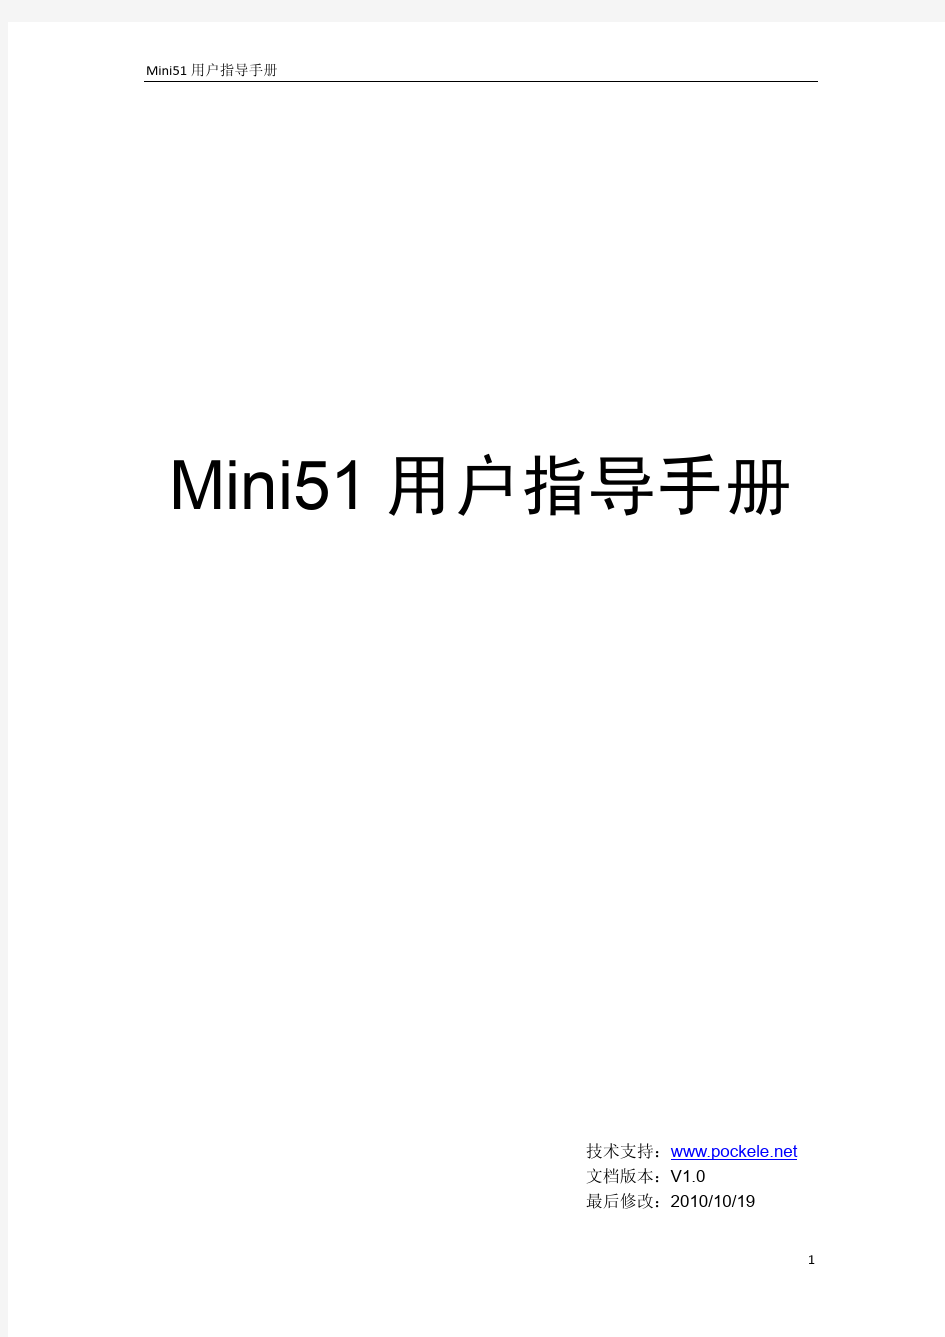 Mini51用户指导手册